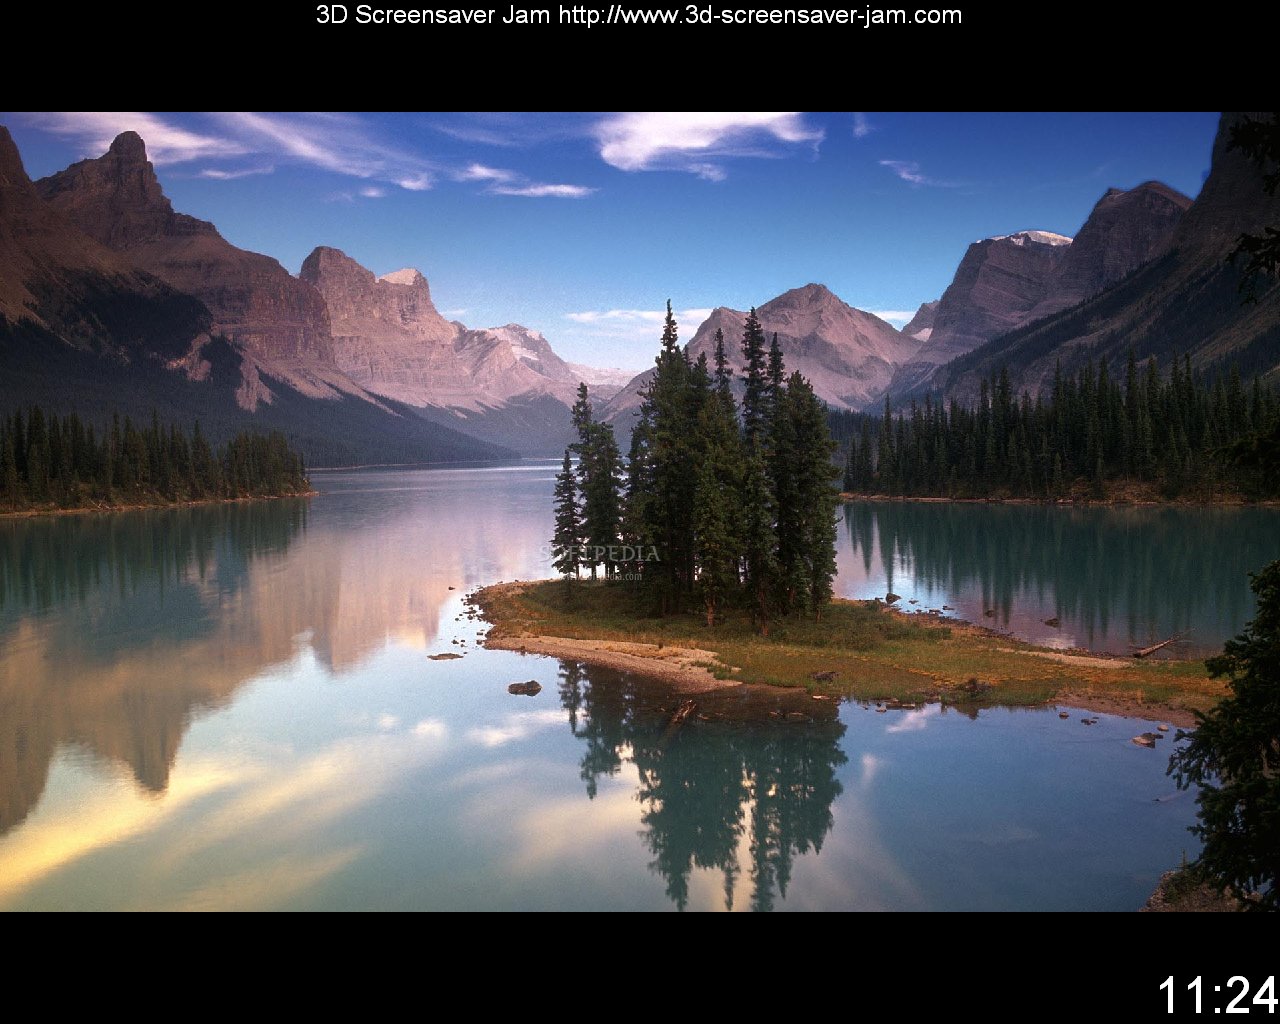 Very popular images: Windows 7 Screensaver